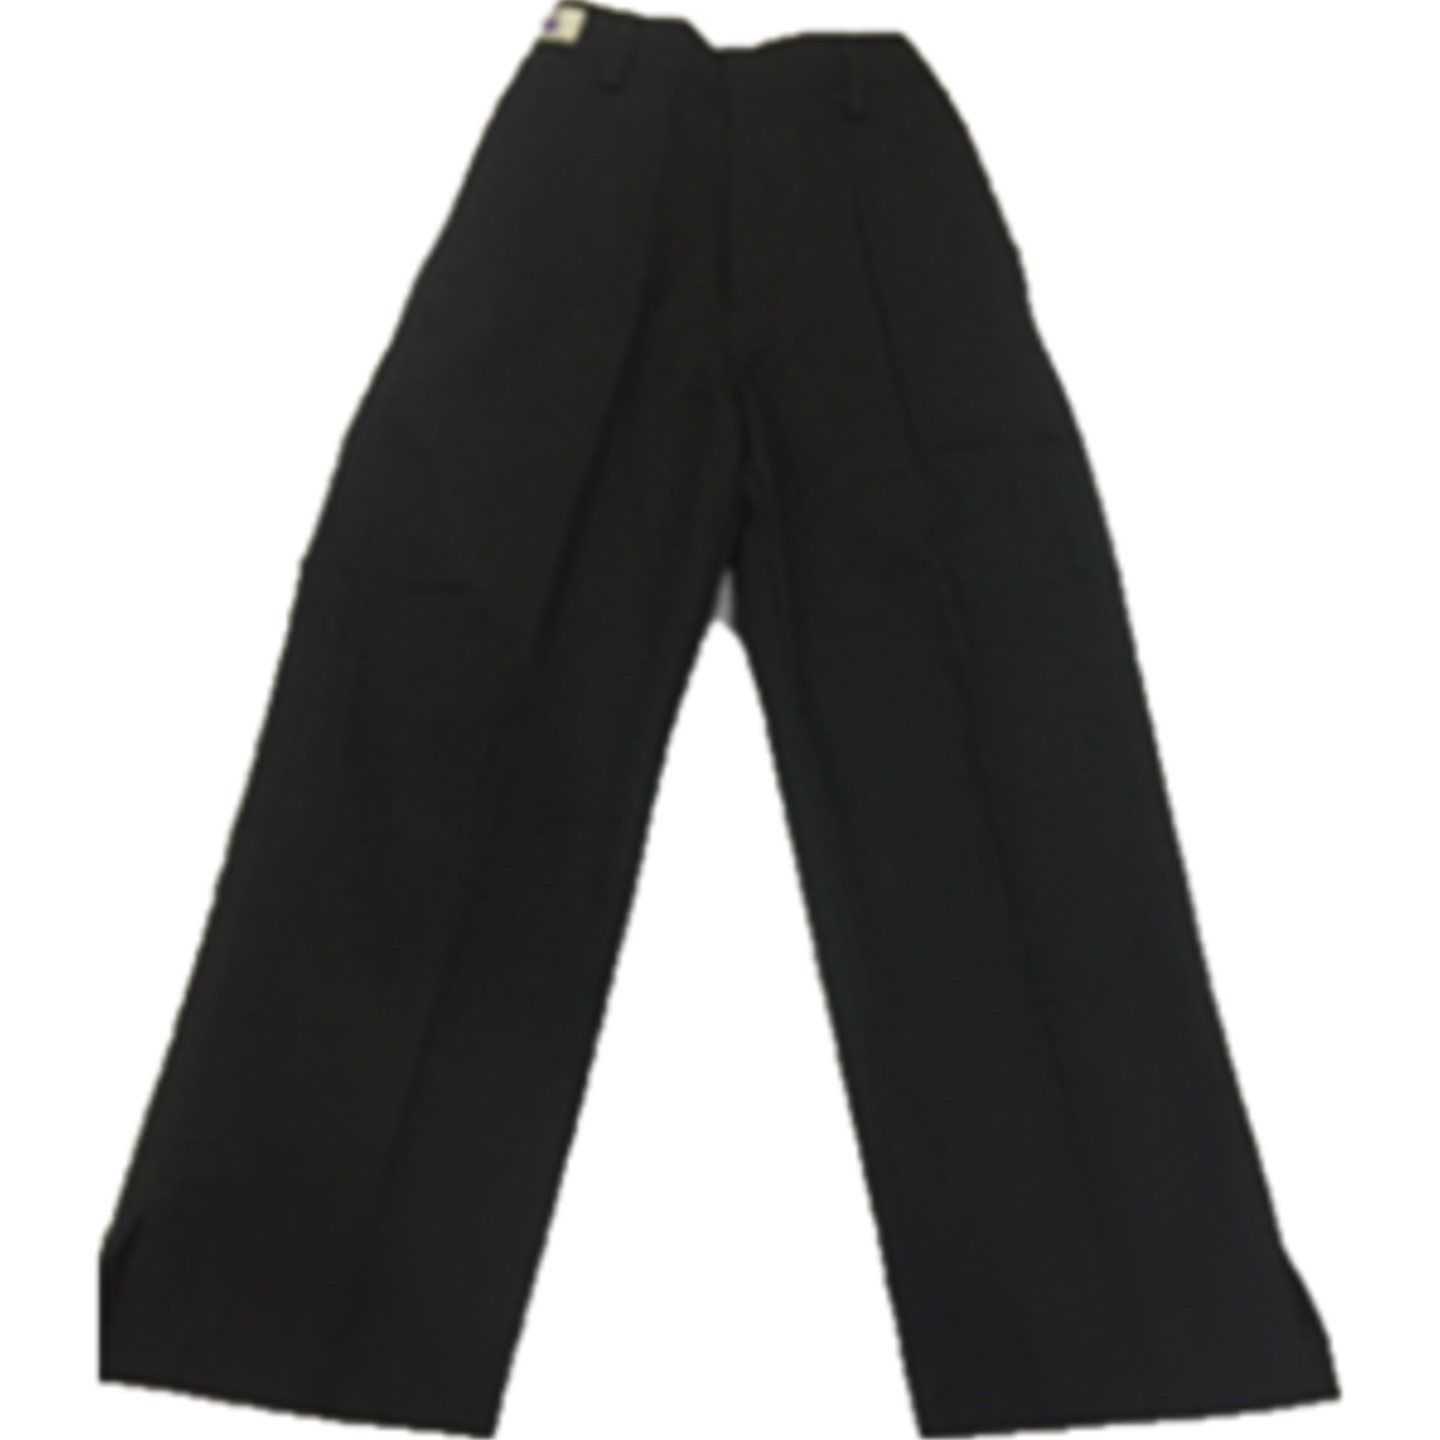 Unisex Black Pants